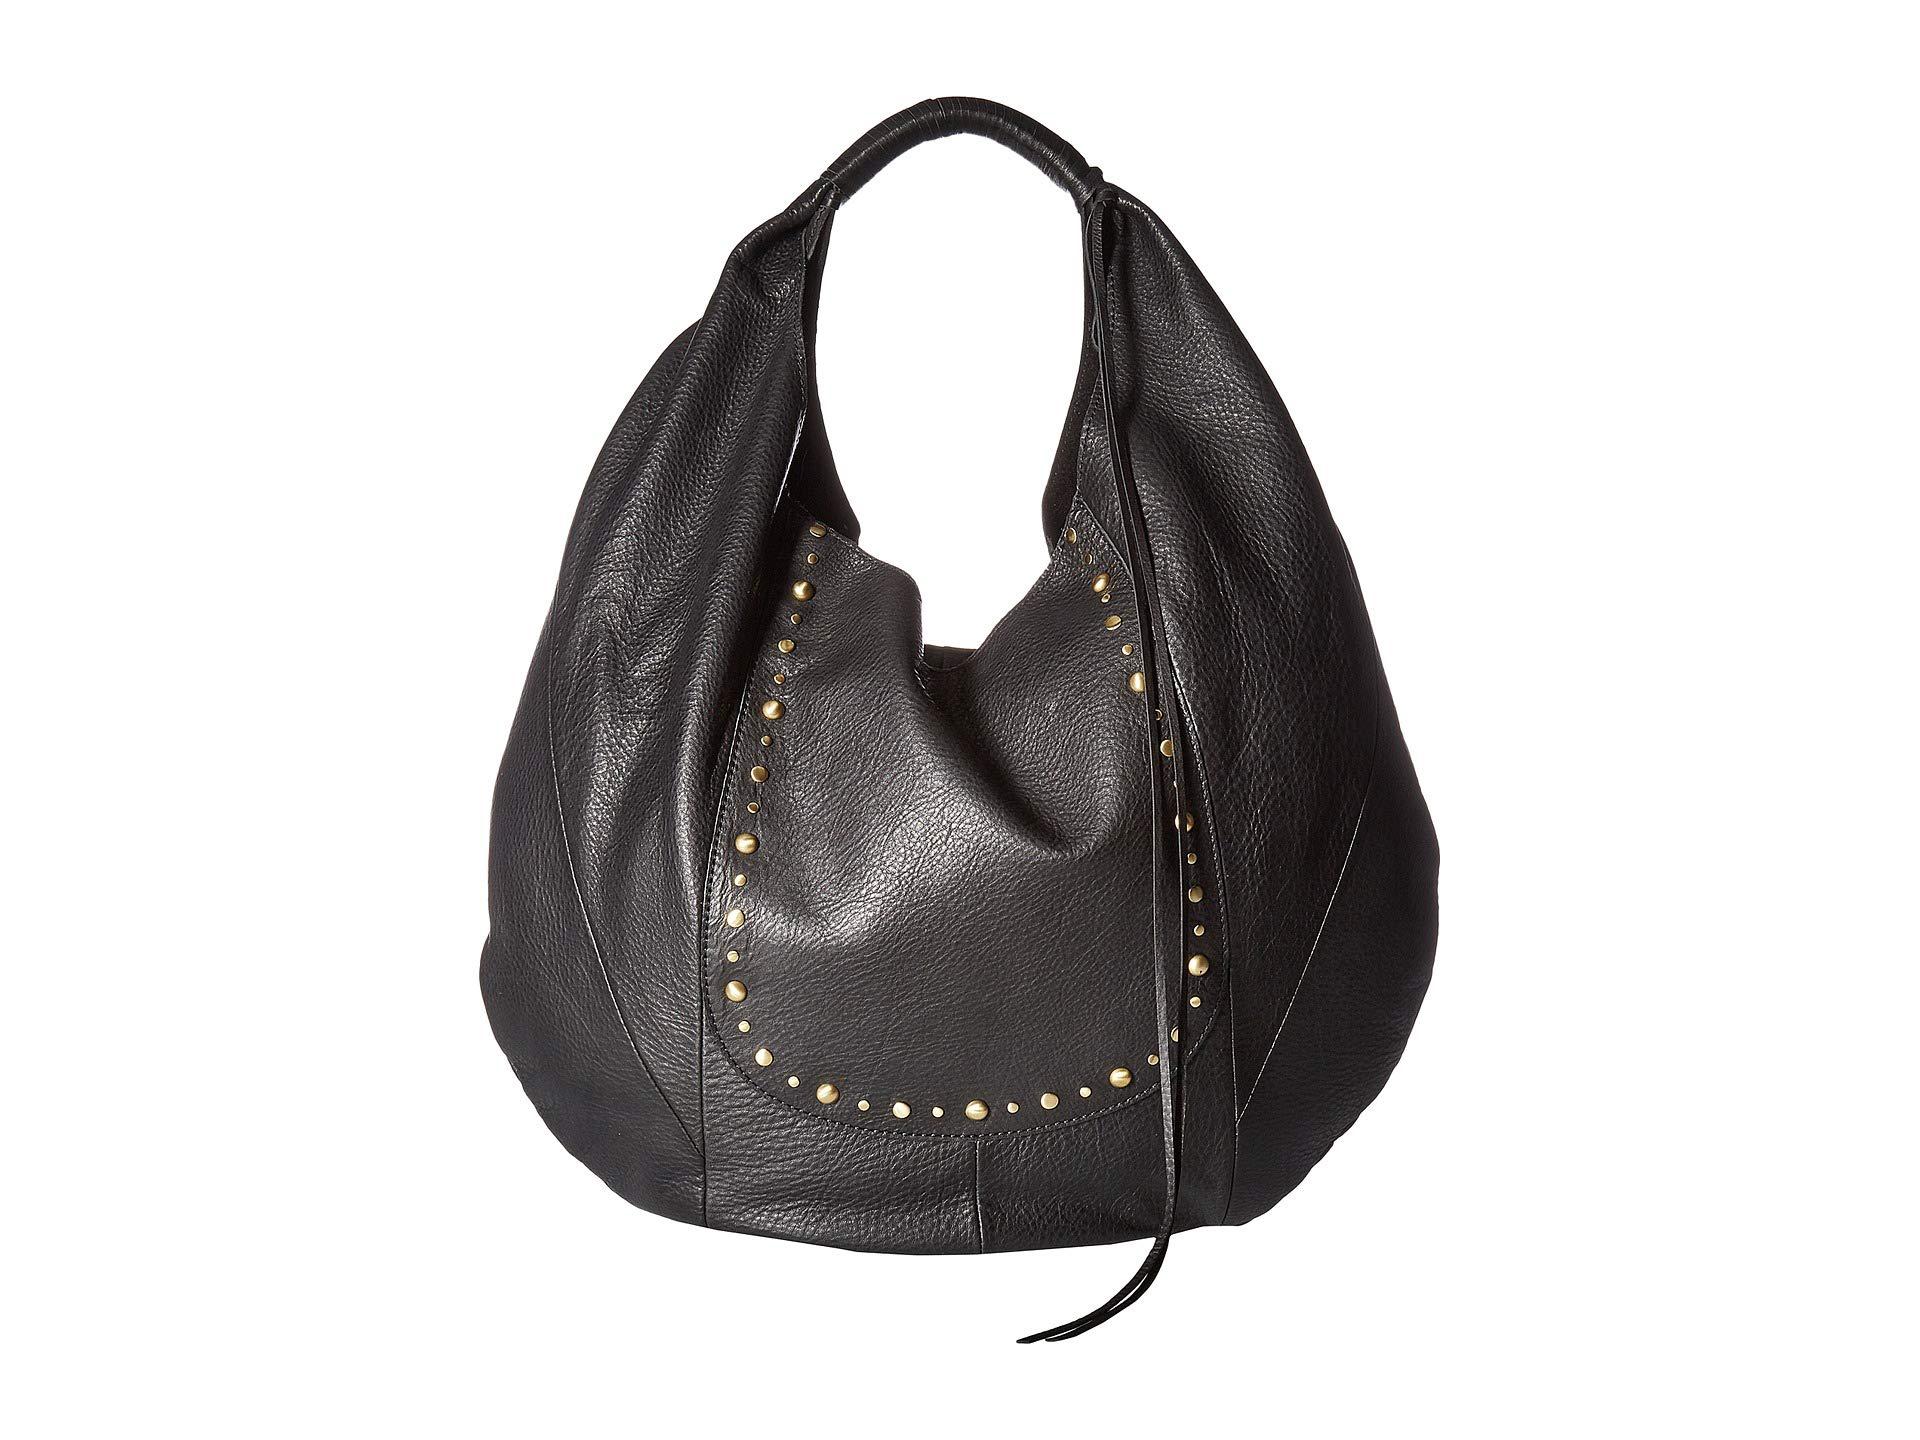 HOBO International Horizon Black Glazed Leather Shoulder Bag Purse